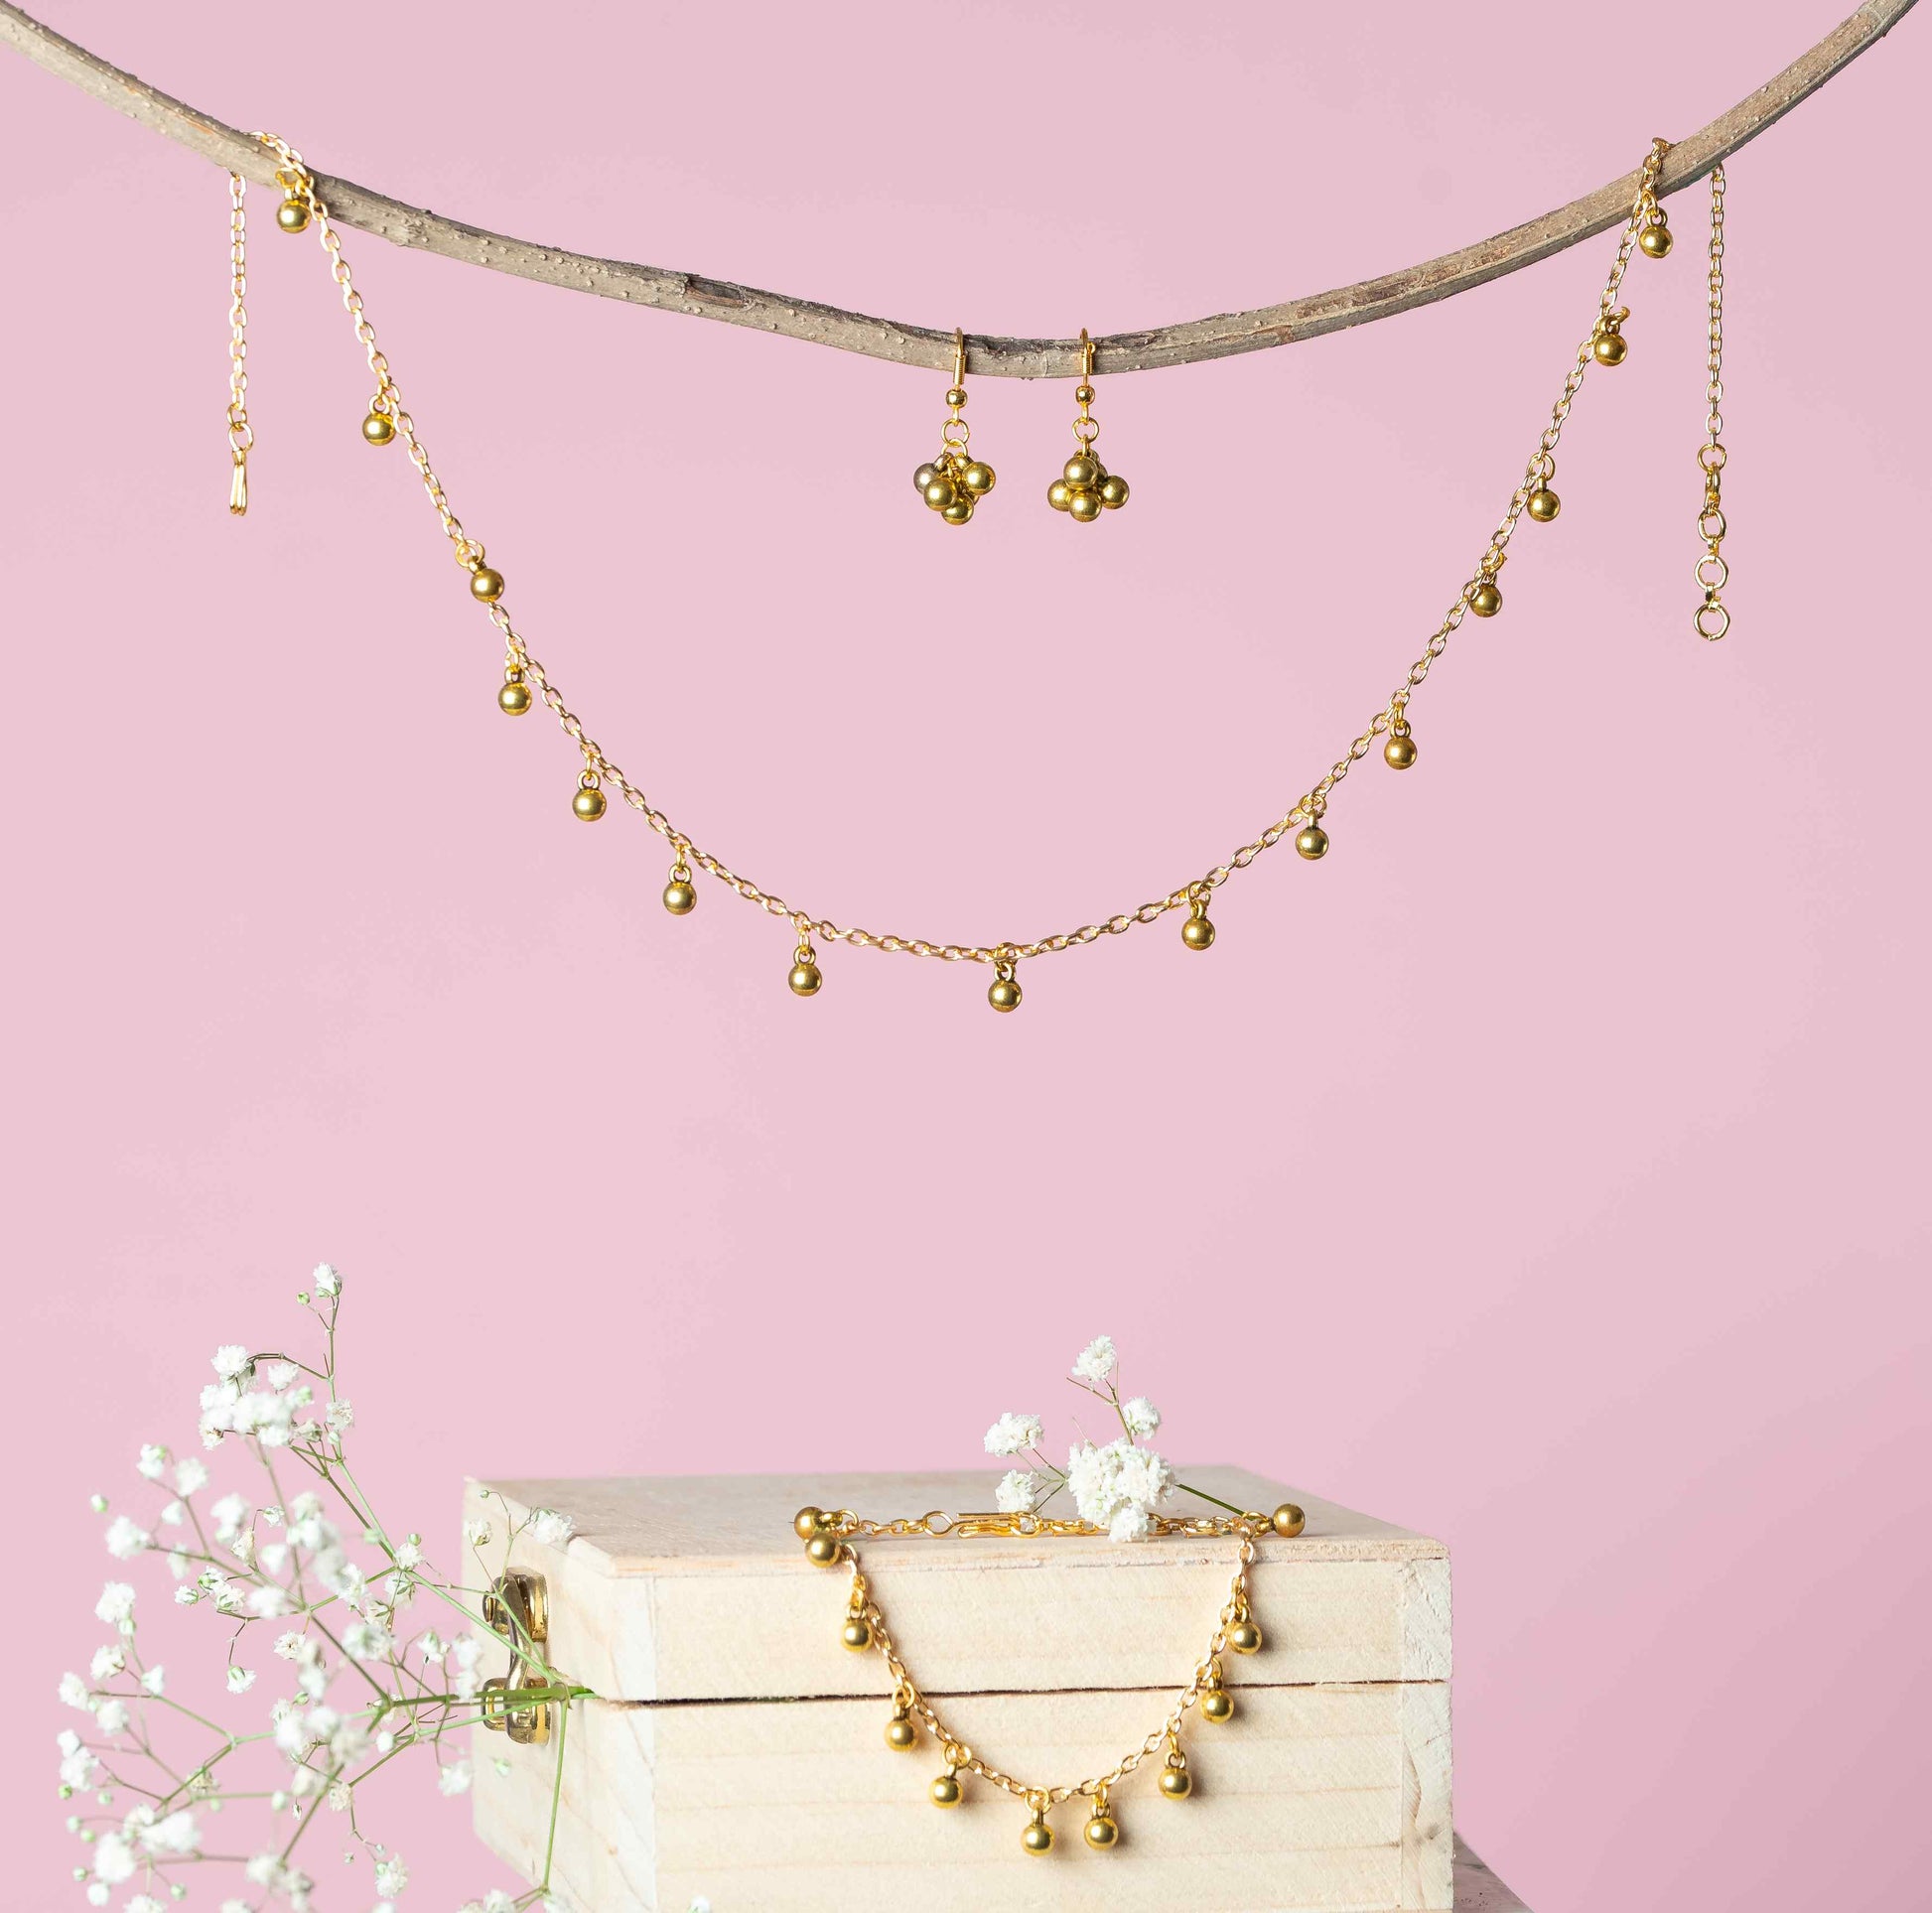 Golden Balls and Chain Necklace, Bracelet & Earrings Set - Gold